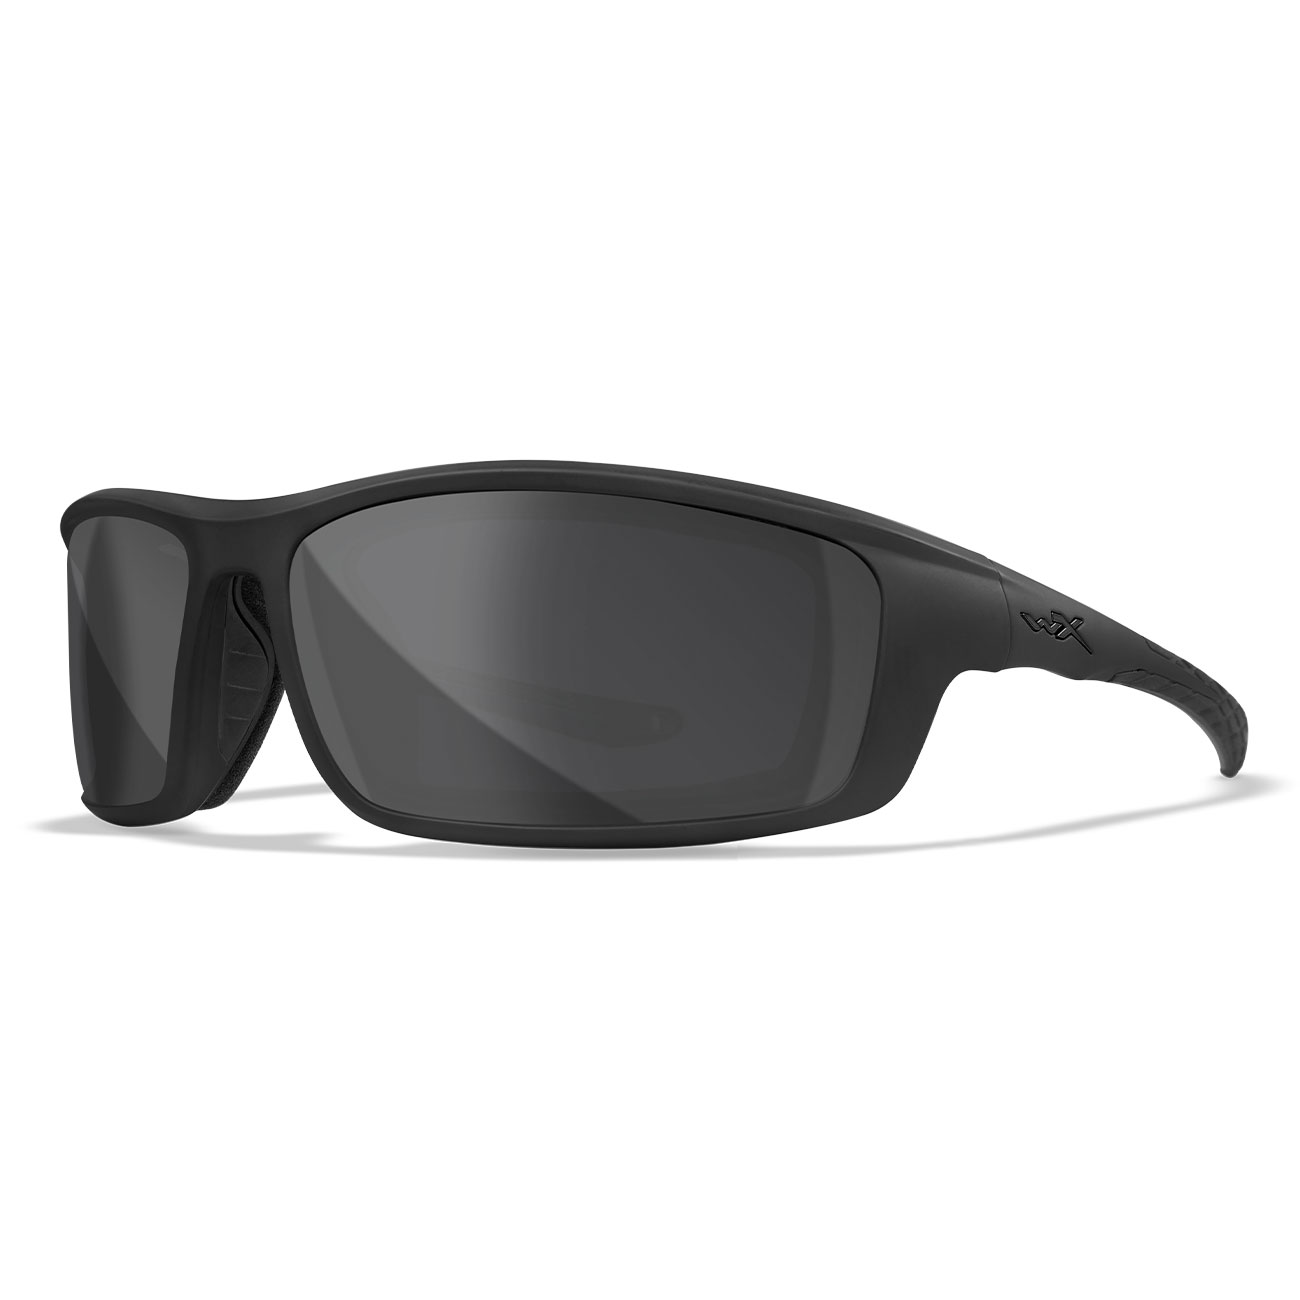 Wiley X Sonnenbrille Grid matt schwarz Glser grau inkl. Brillenetui und Facial Cavity Dichtung